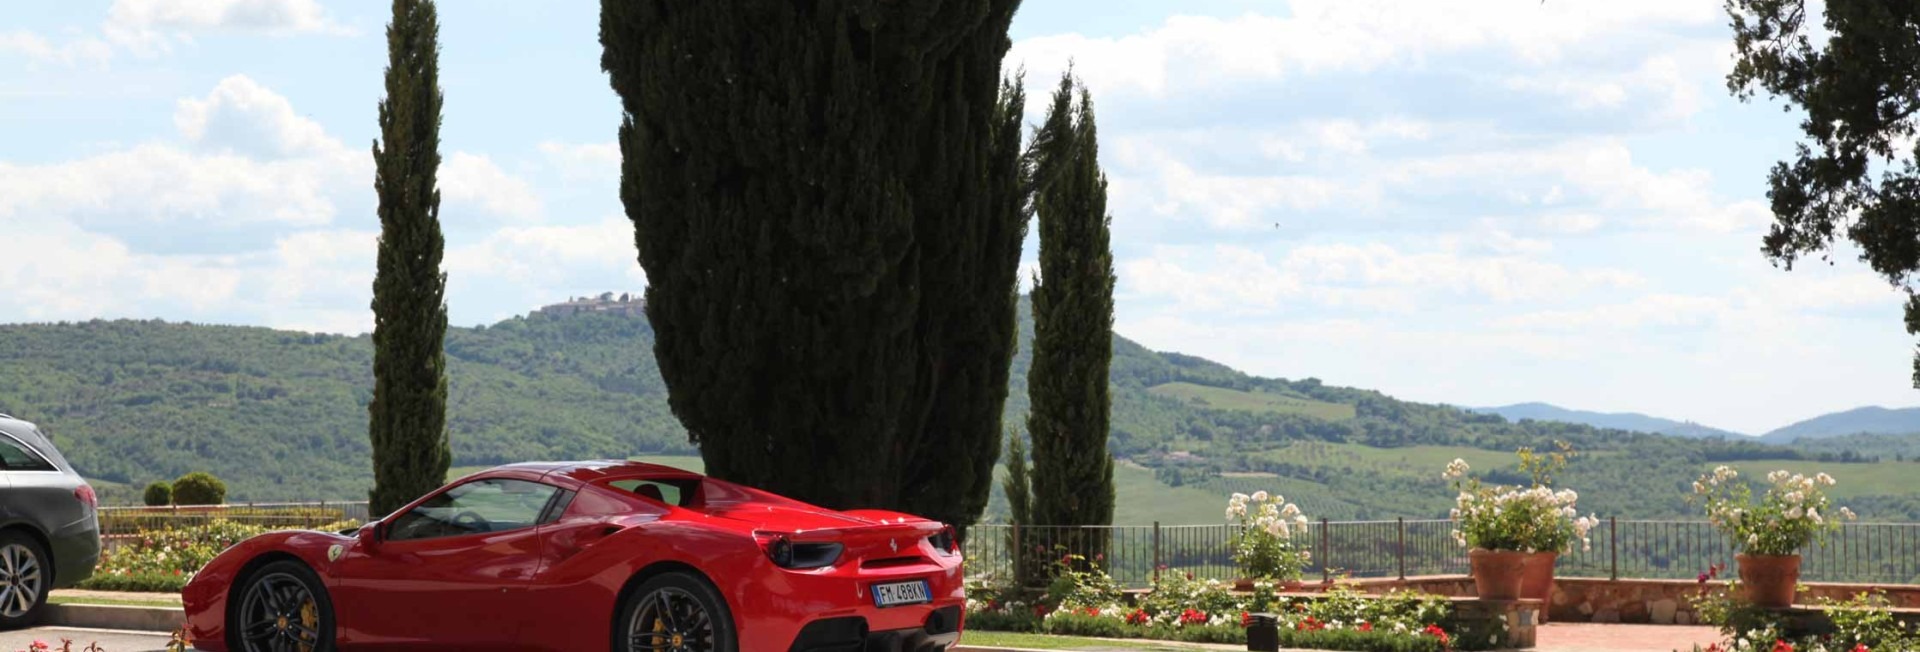 drive in motion Sports Car Tour Italy Chianti Ferrari